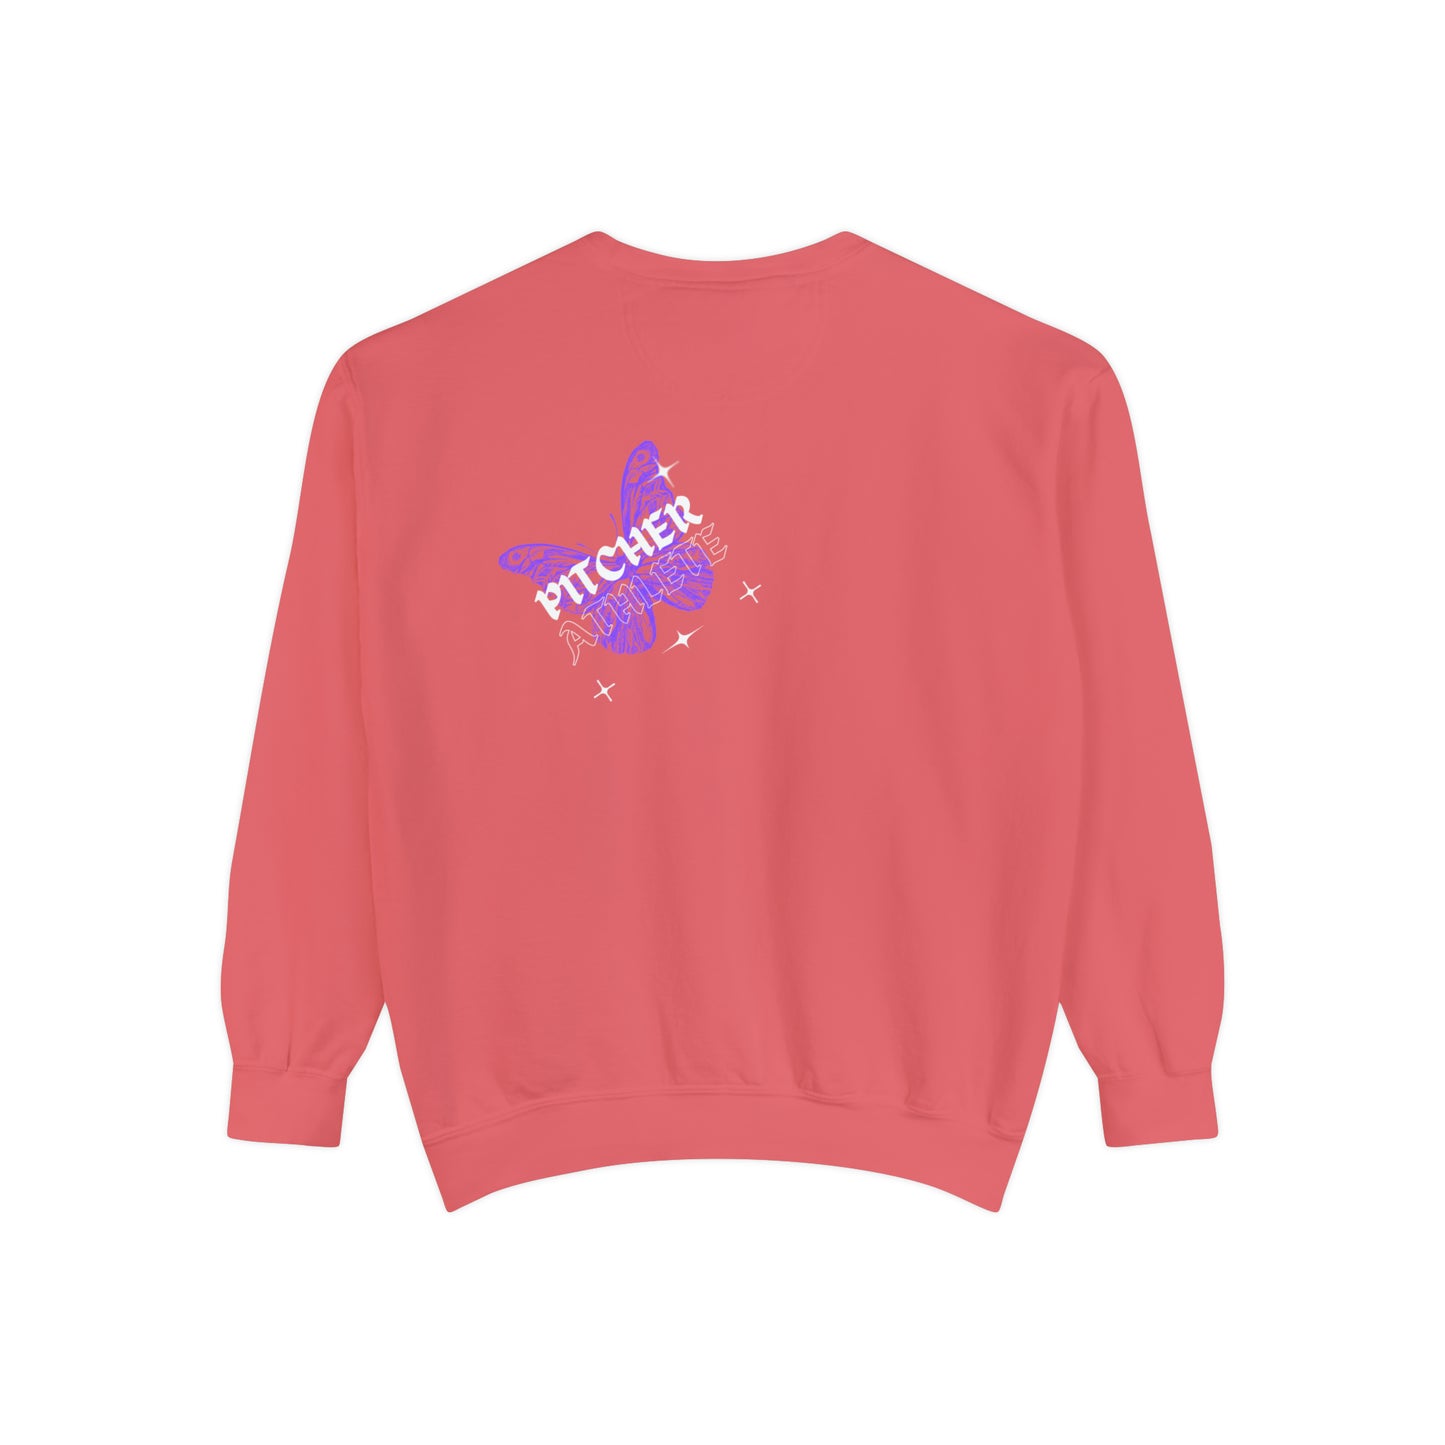 "No Po" Unisex Garment-Dyed Sweatshirt